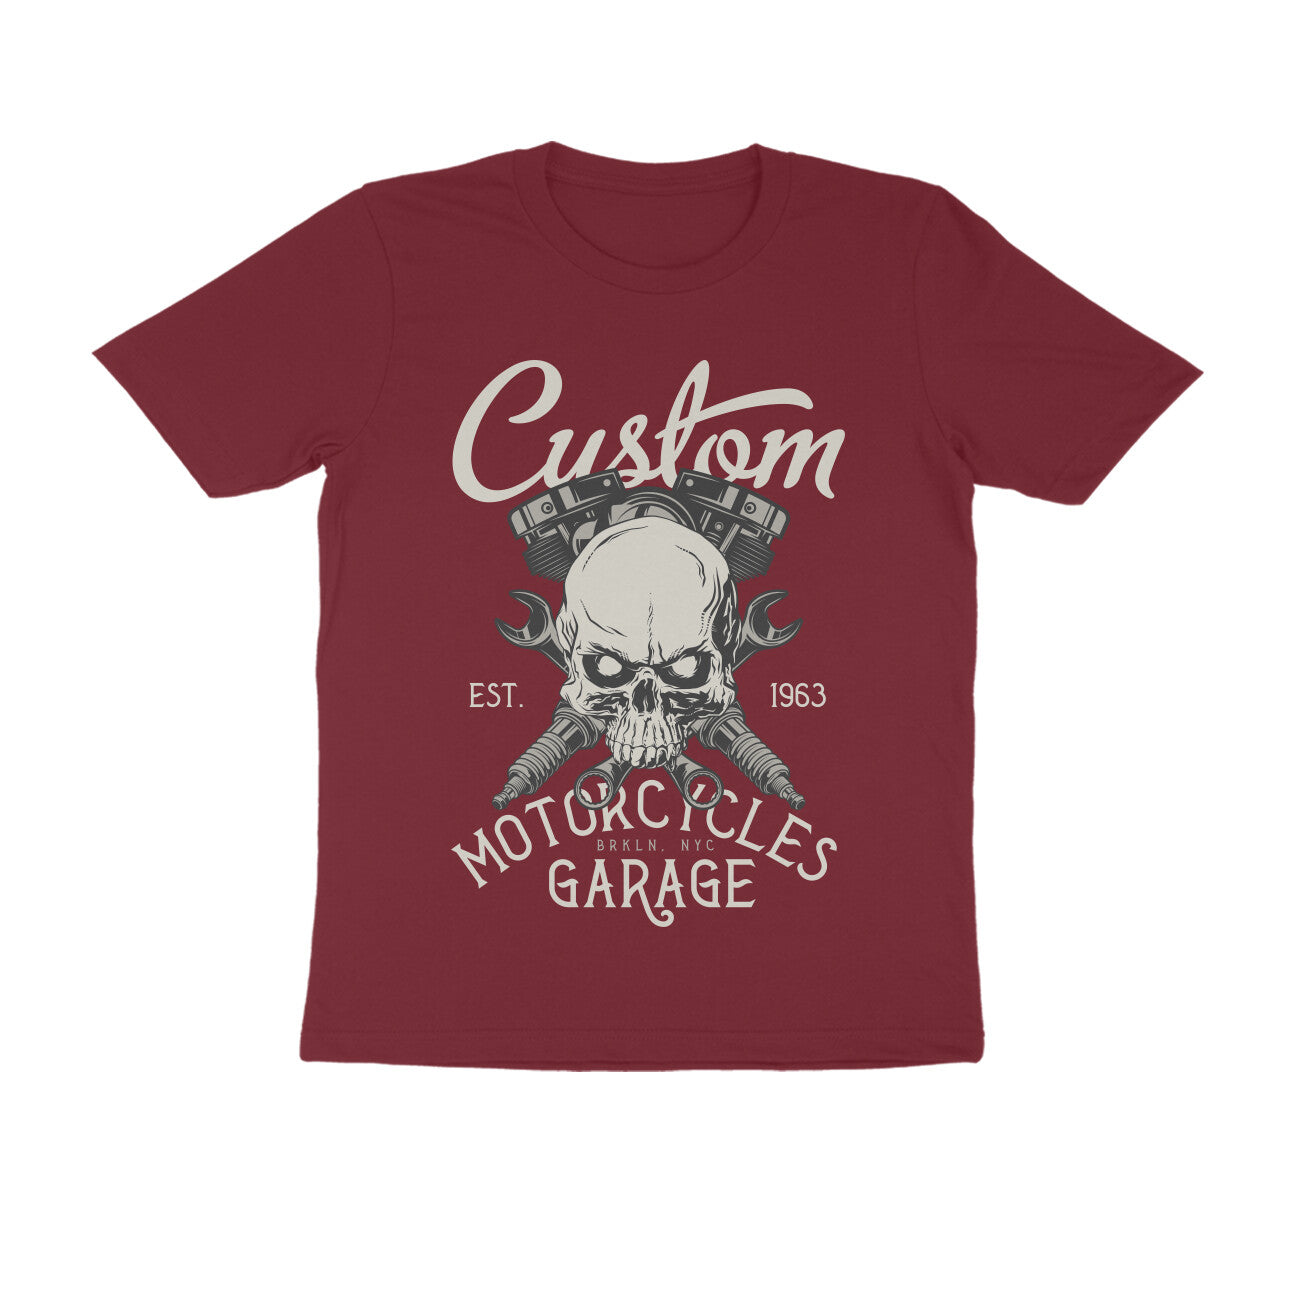 Custom Motorcycles Garage Estd. 1963 - T-Shirt